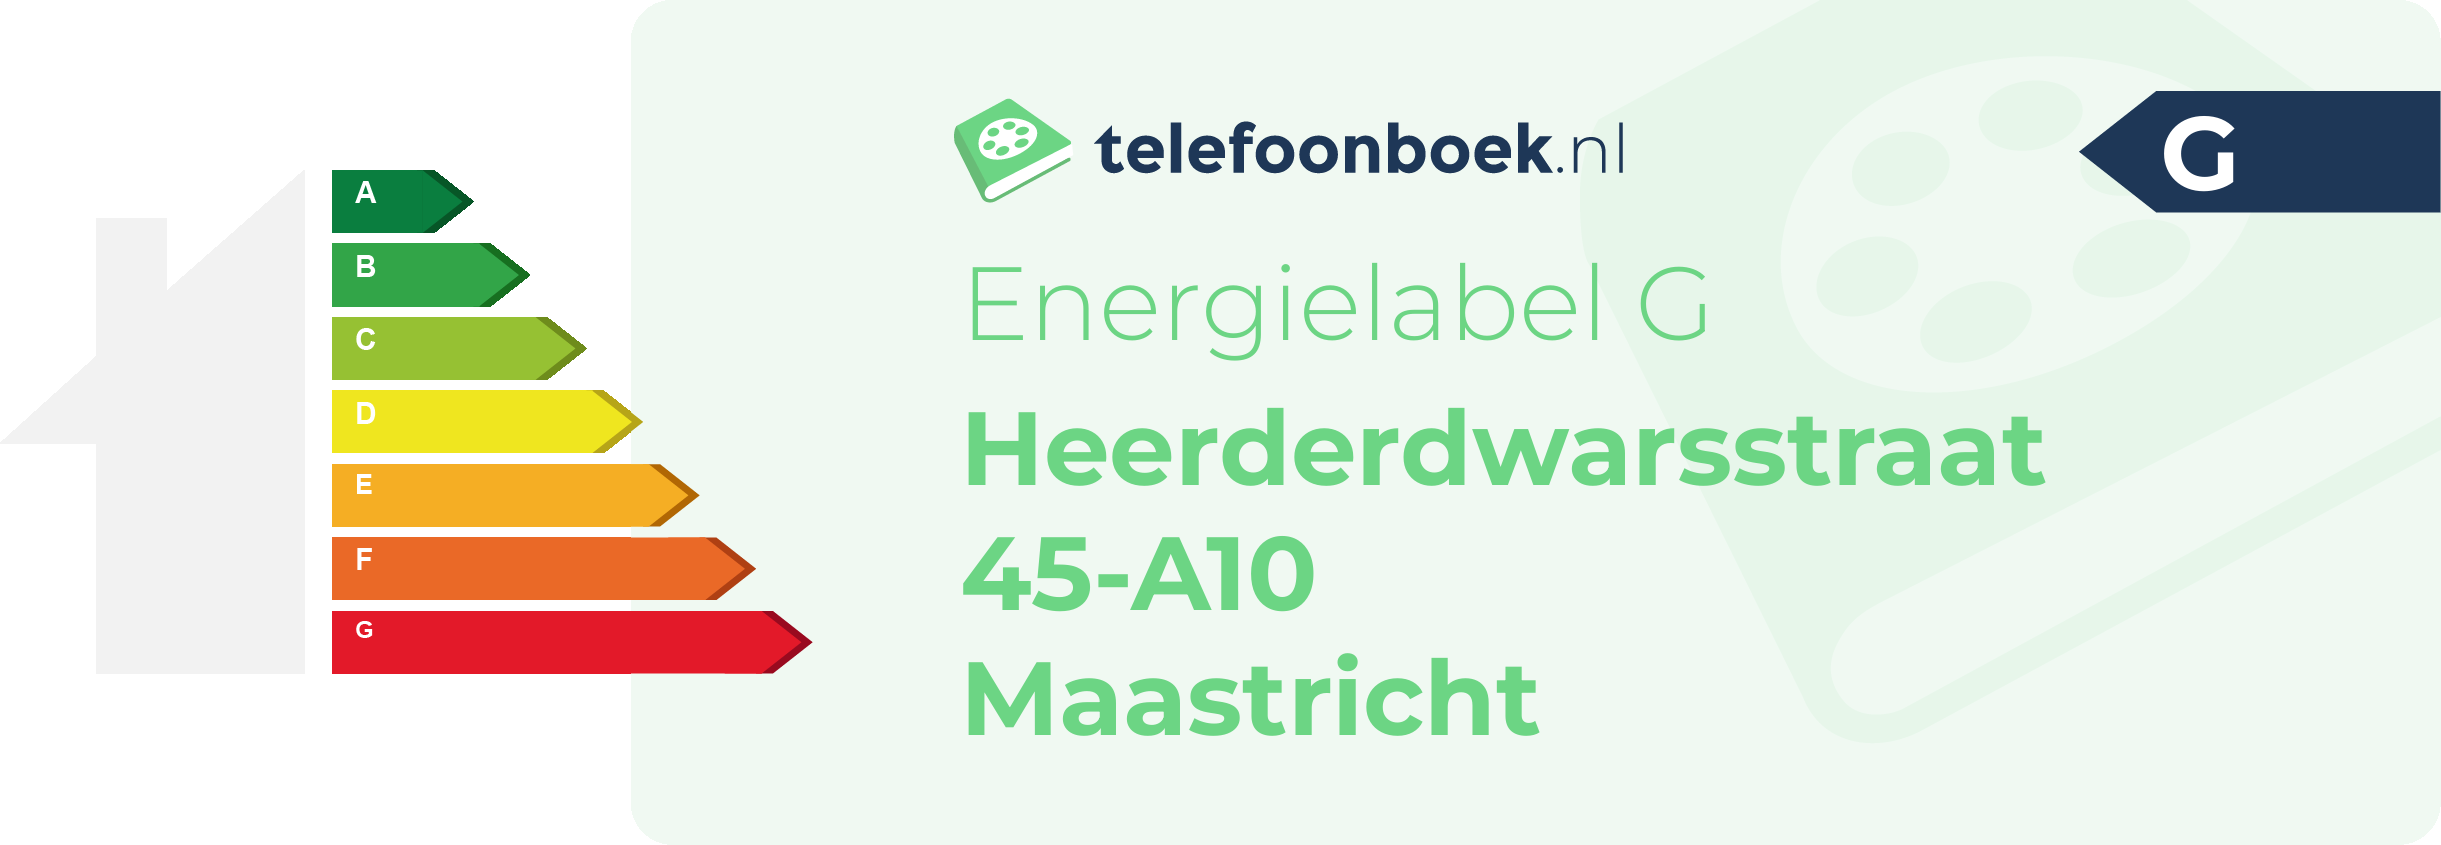 Energielabel Heerderdwarsstraat 45-A10 Maastricht